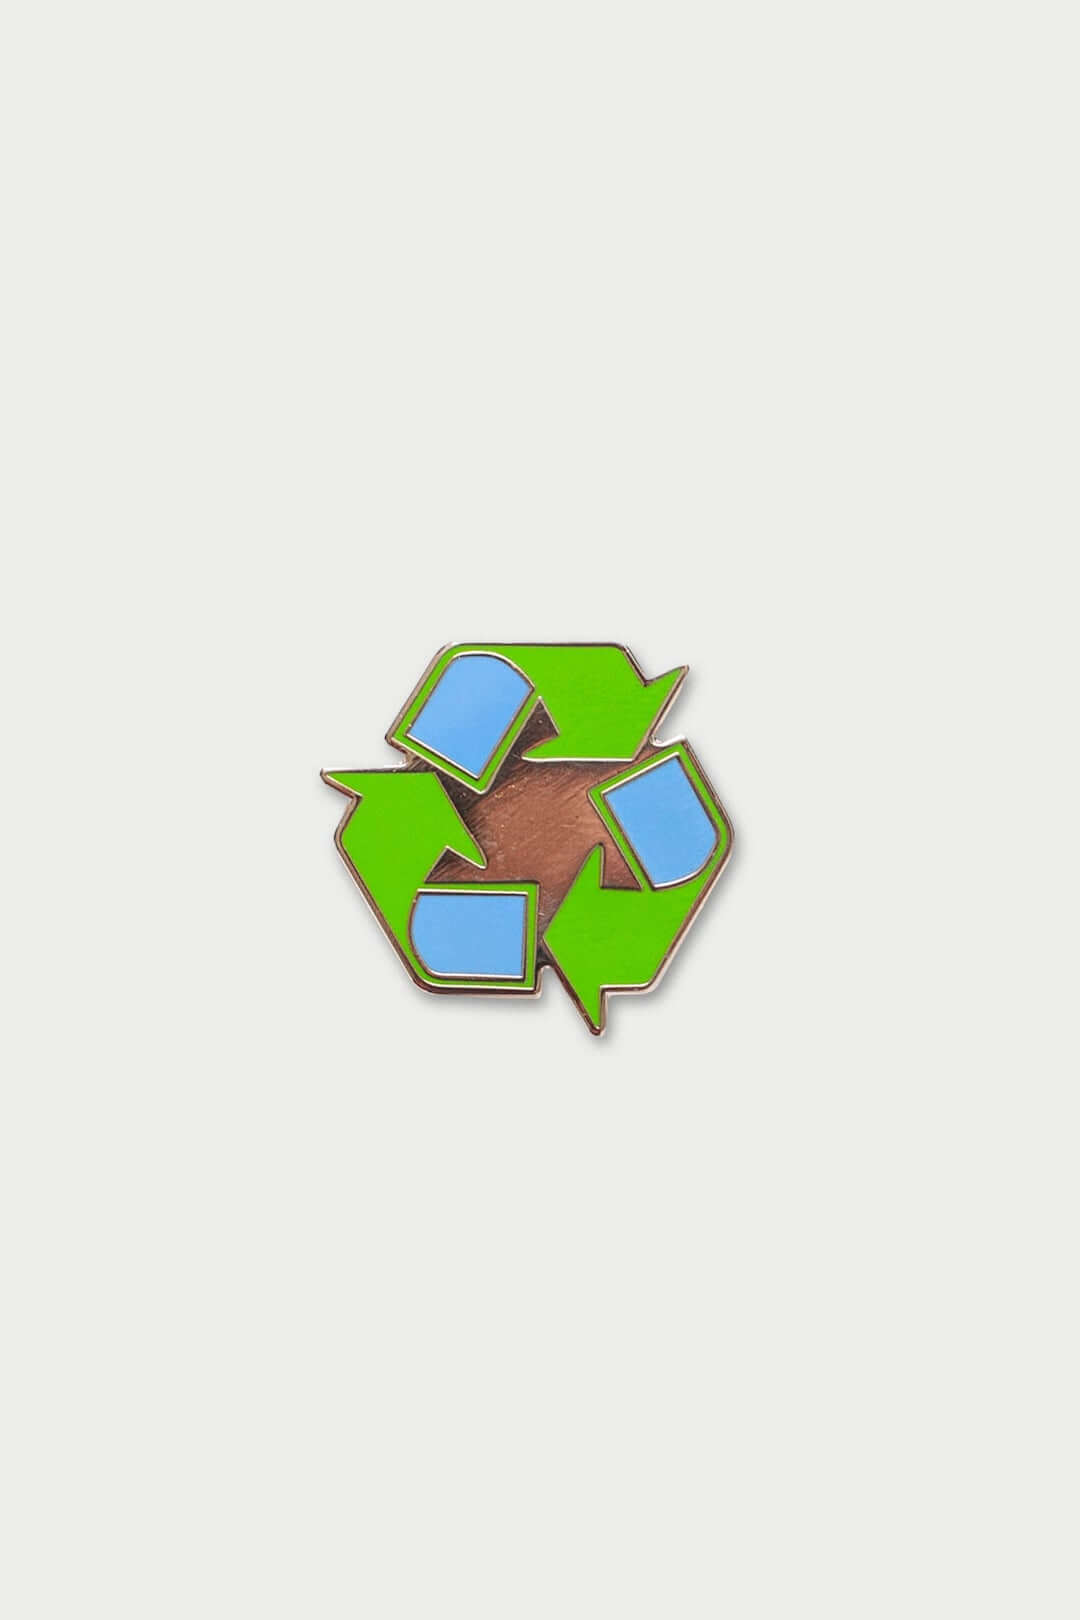 Recycle Earth Pin - Pins - DNO